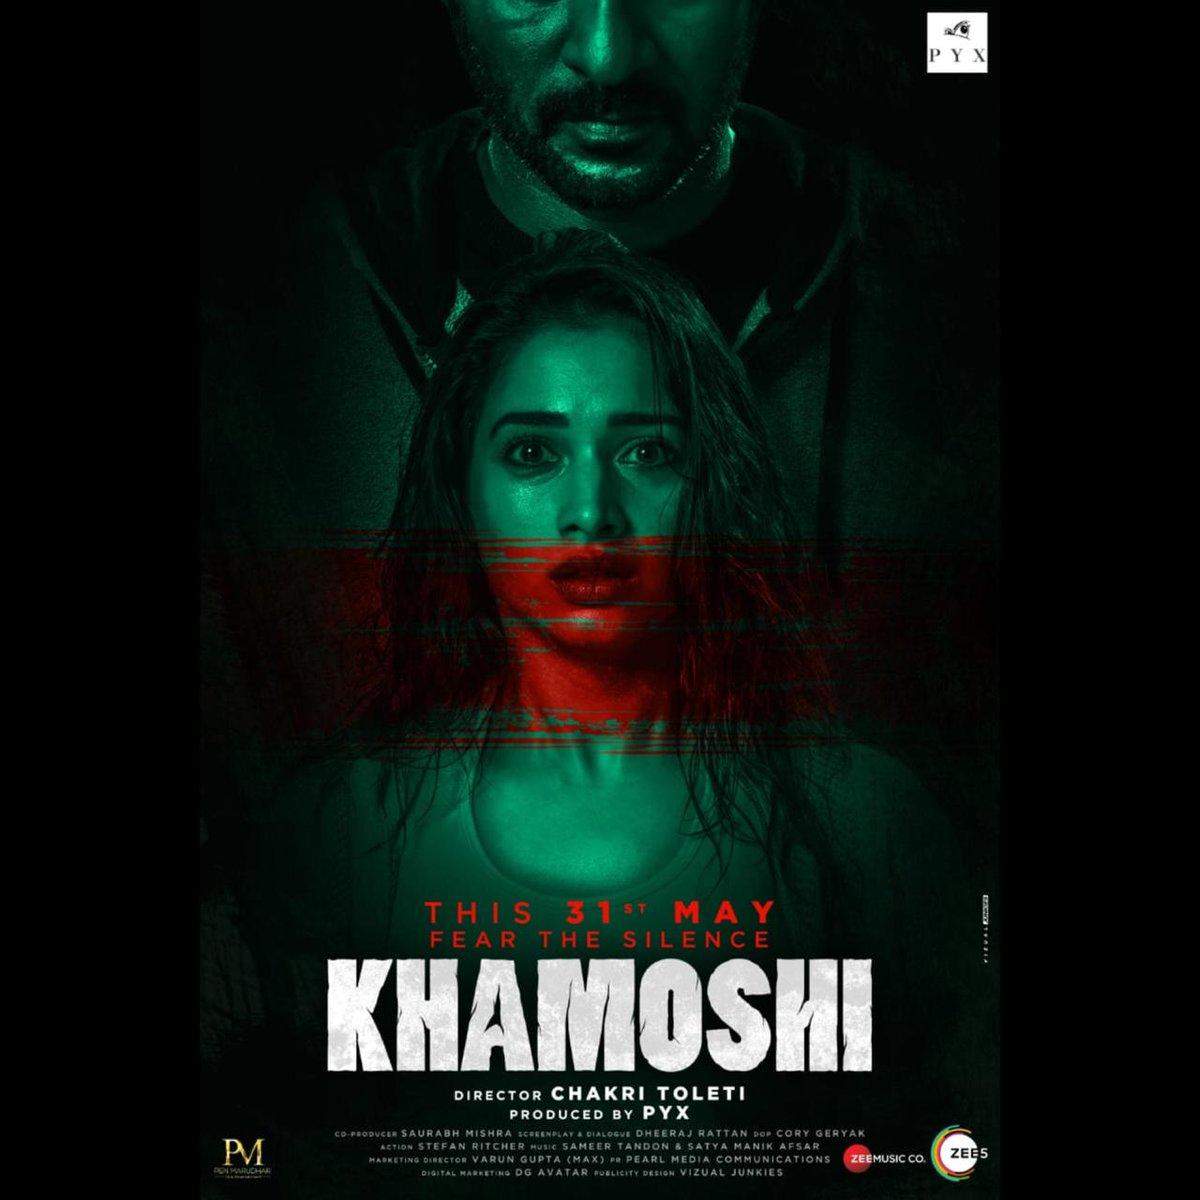 Khamoshi: Spine chilling with supernatural horror starring Tamannah Bhatia and Prabhu Deva.